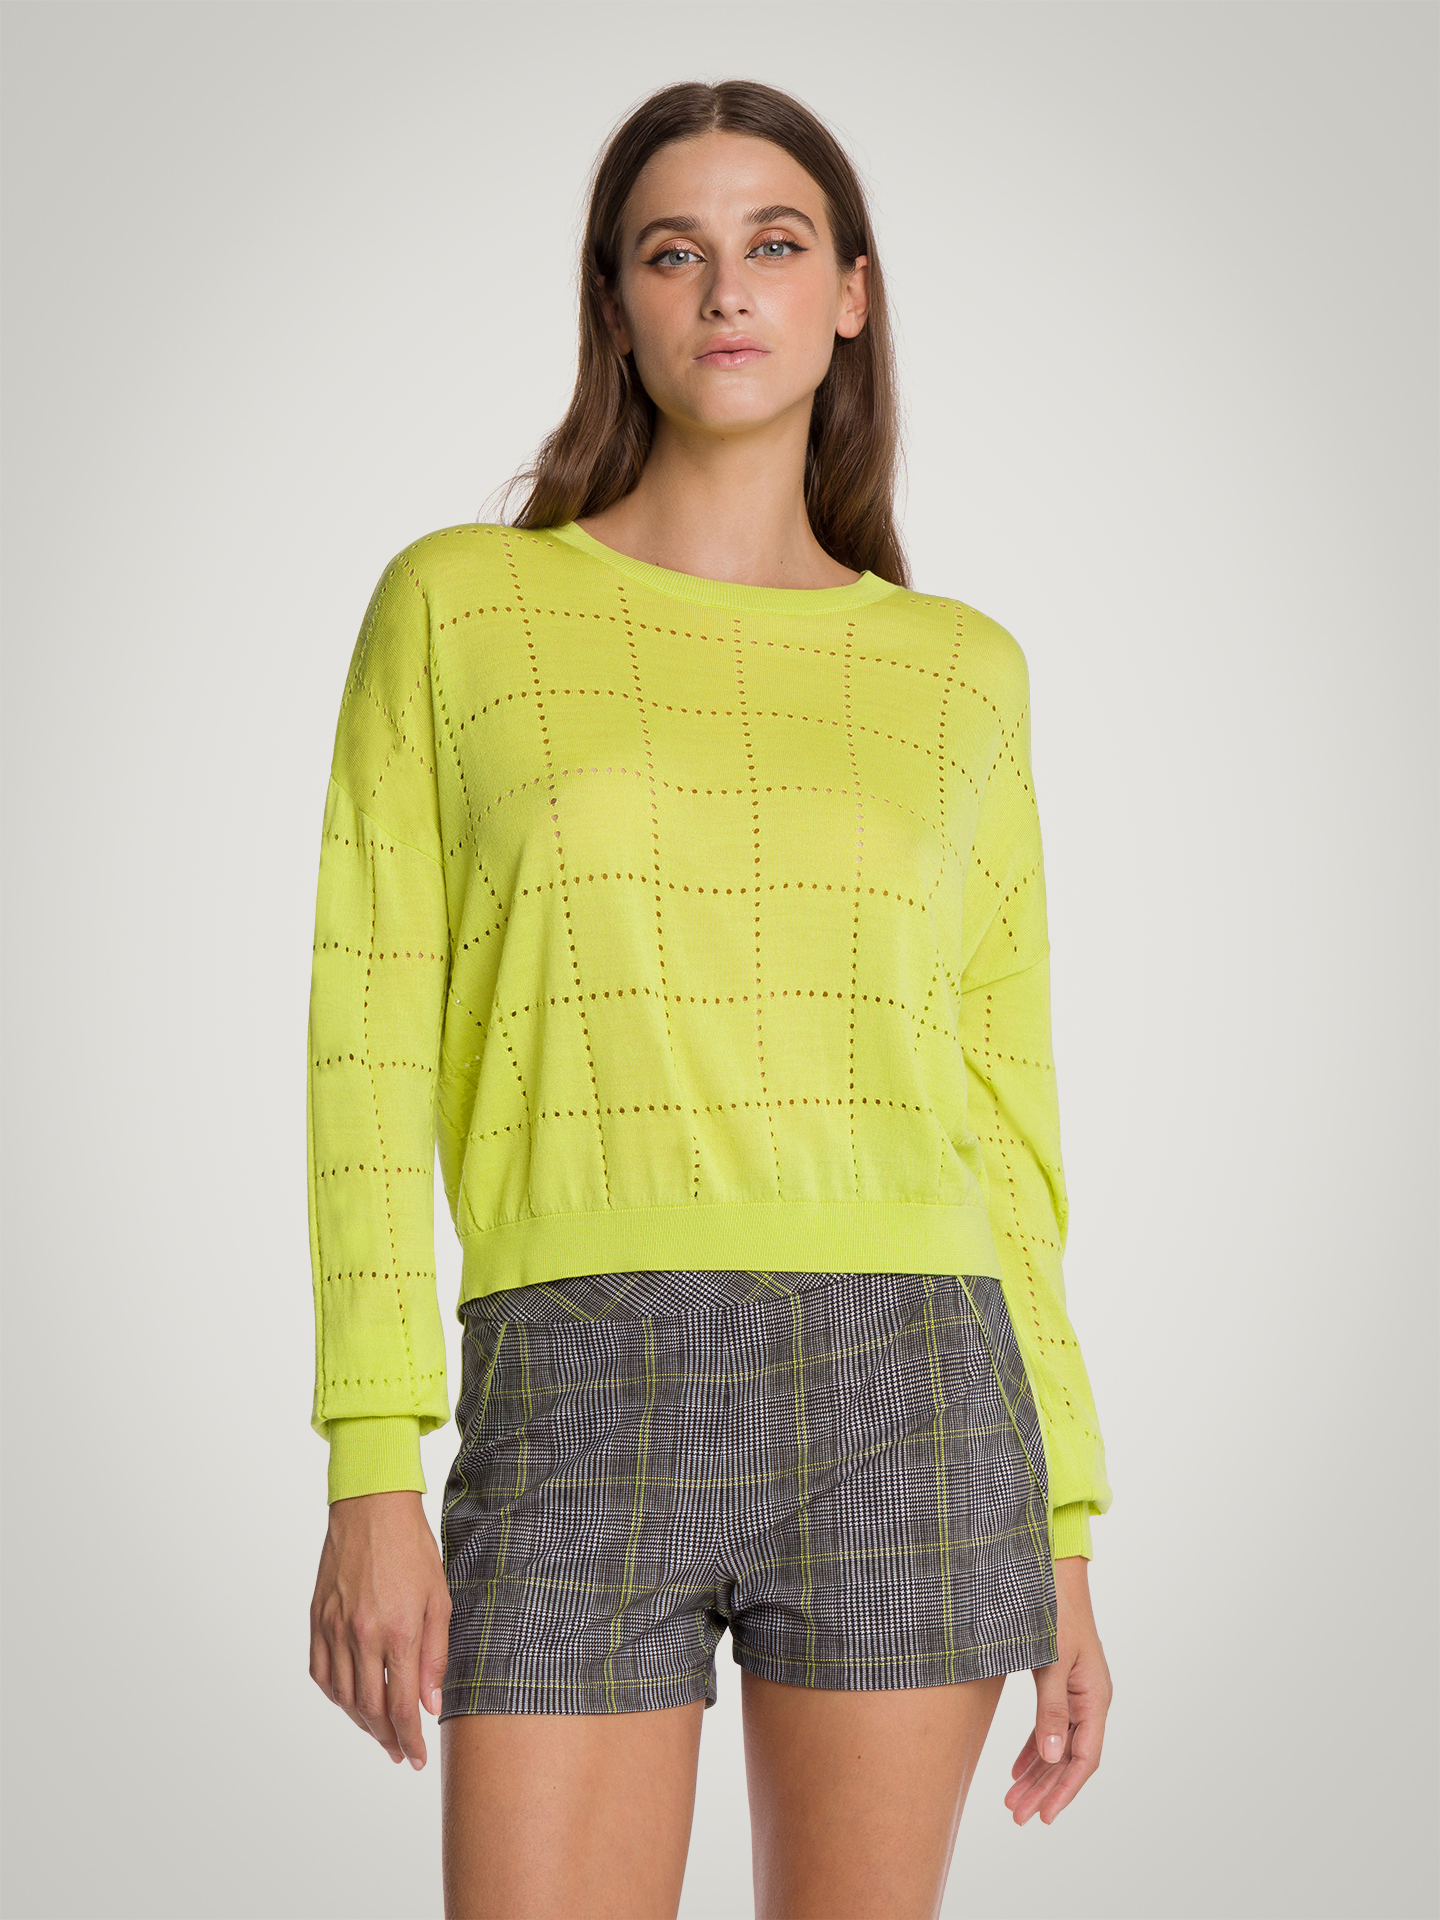 Wolford - Summer Knit Top Long Sleeves, Frau, paradise green, Größe: XS günstig online kaufen